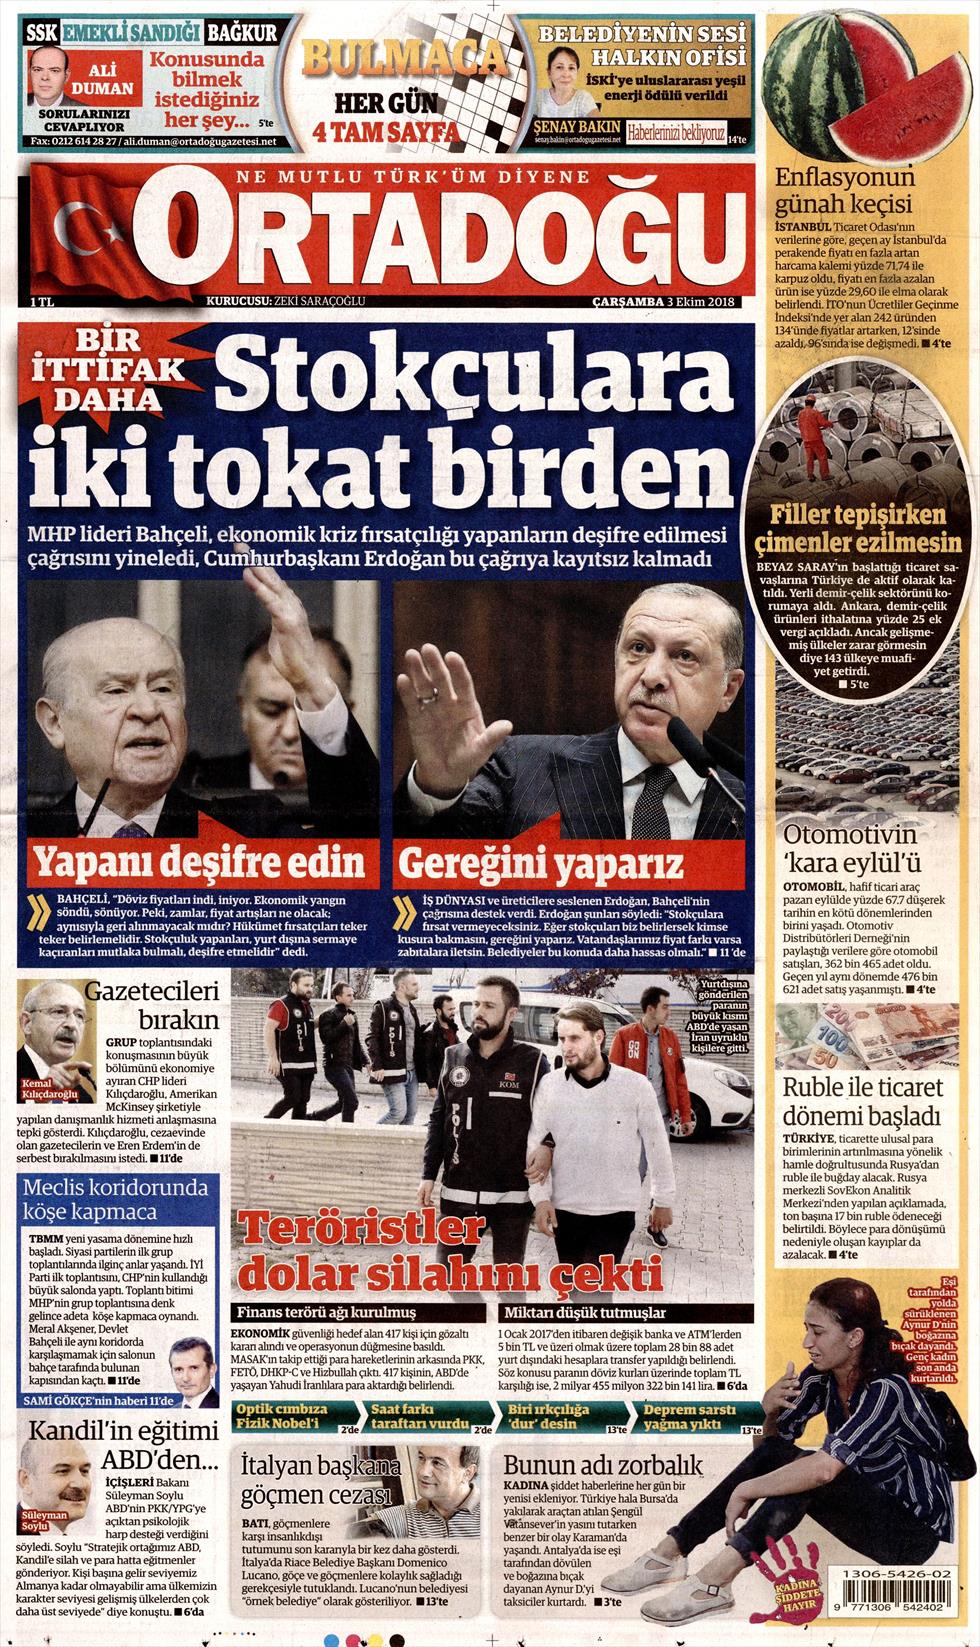 /data/newspapers/ortadogu.jpg